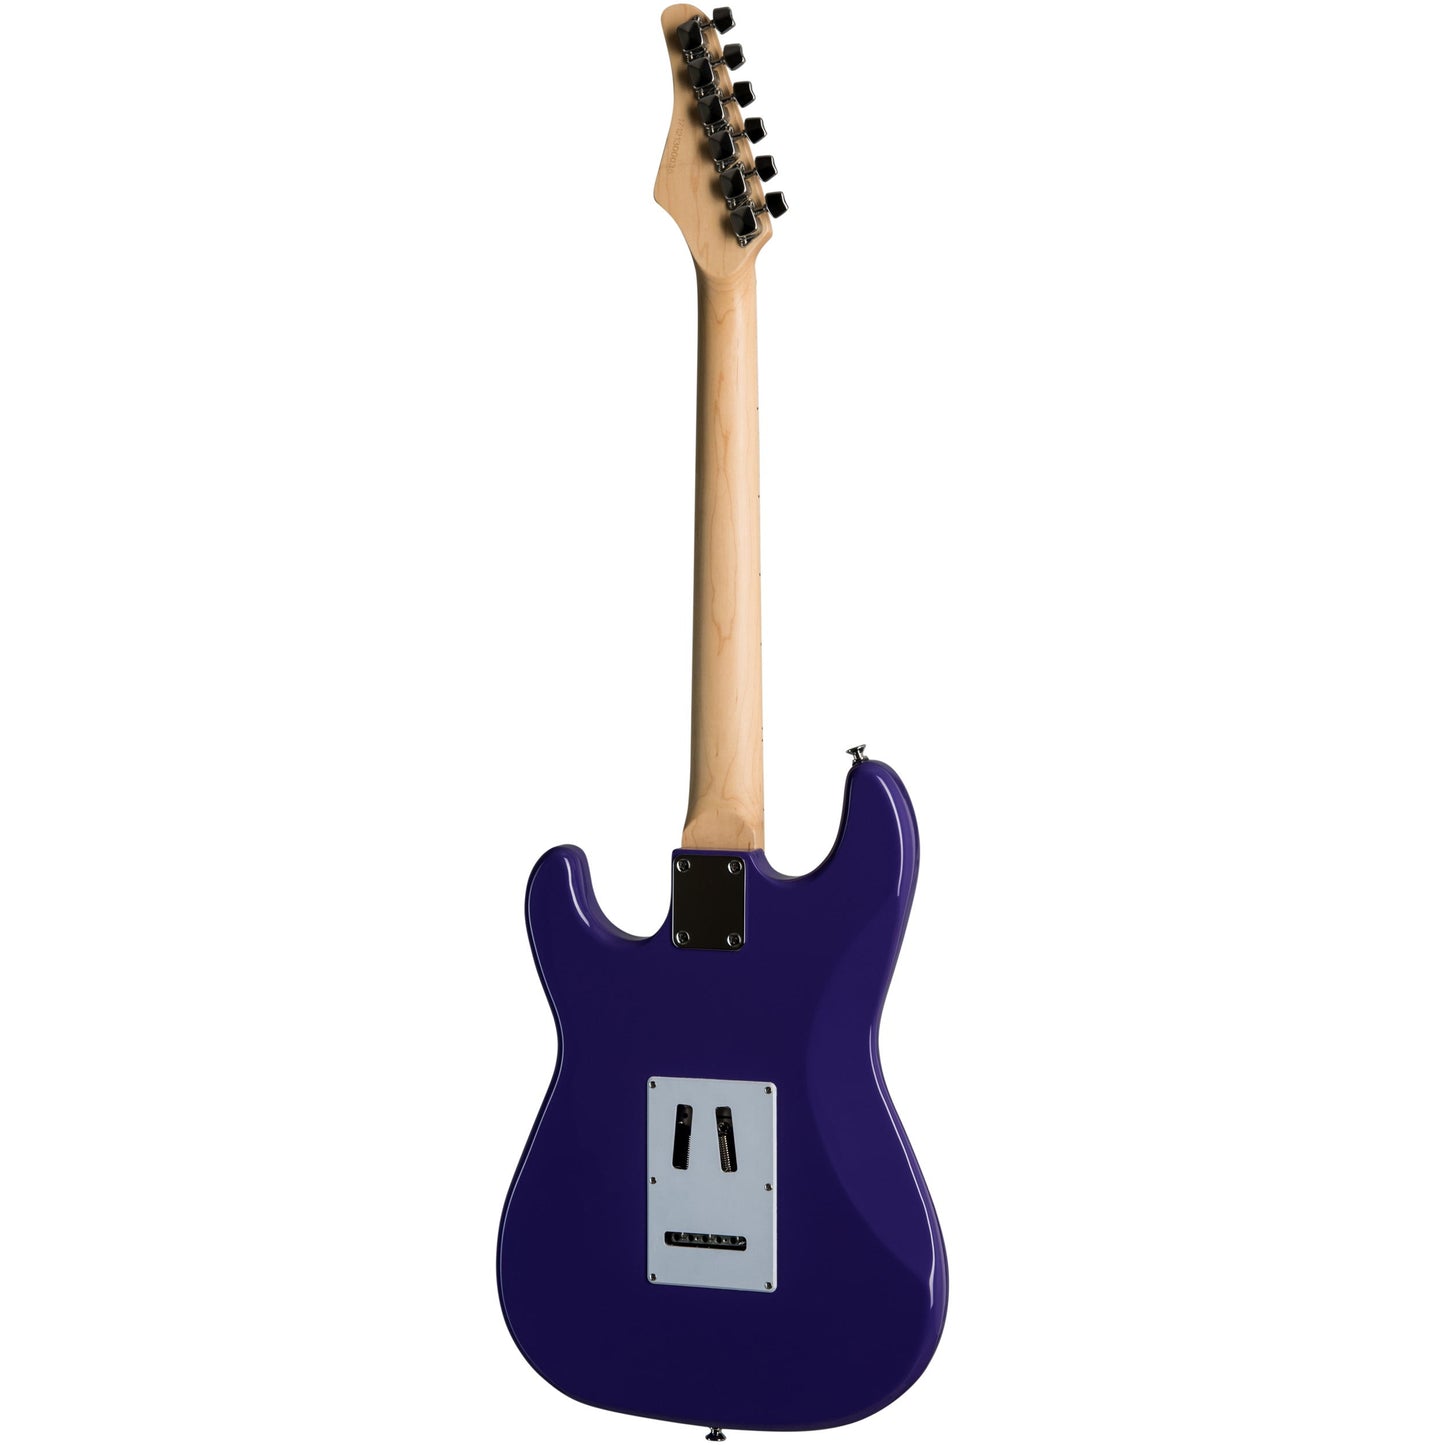 Kramer Focus VT-211S Electric Guitar, Purple